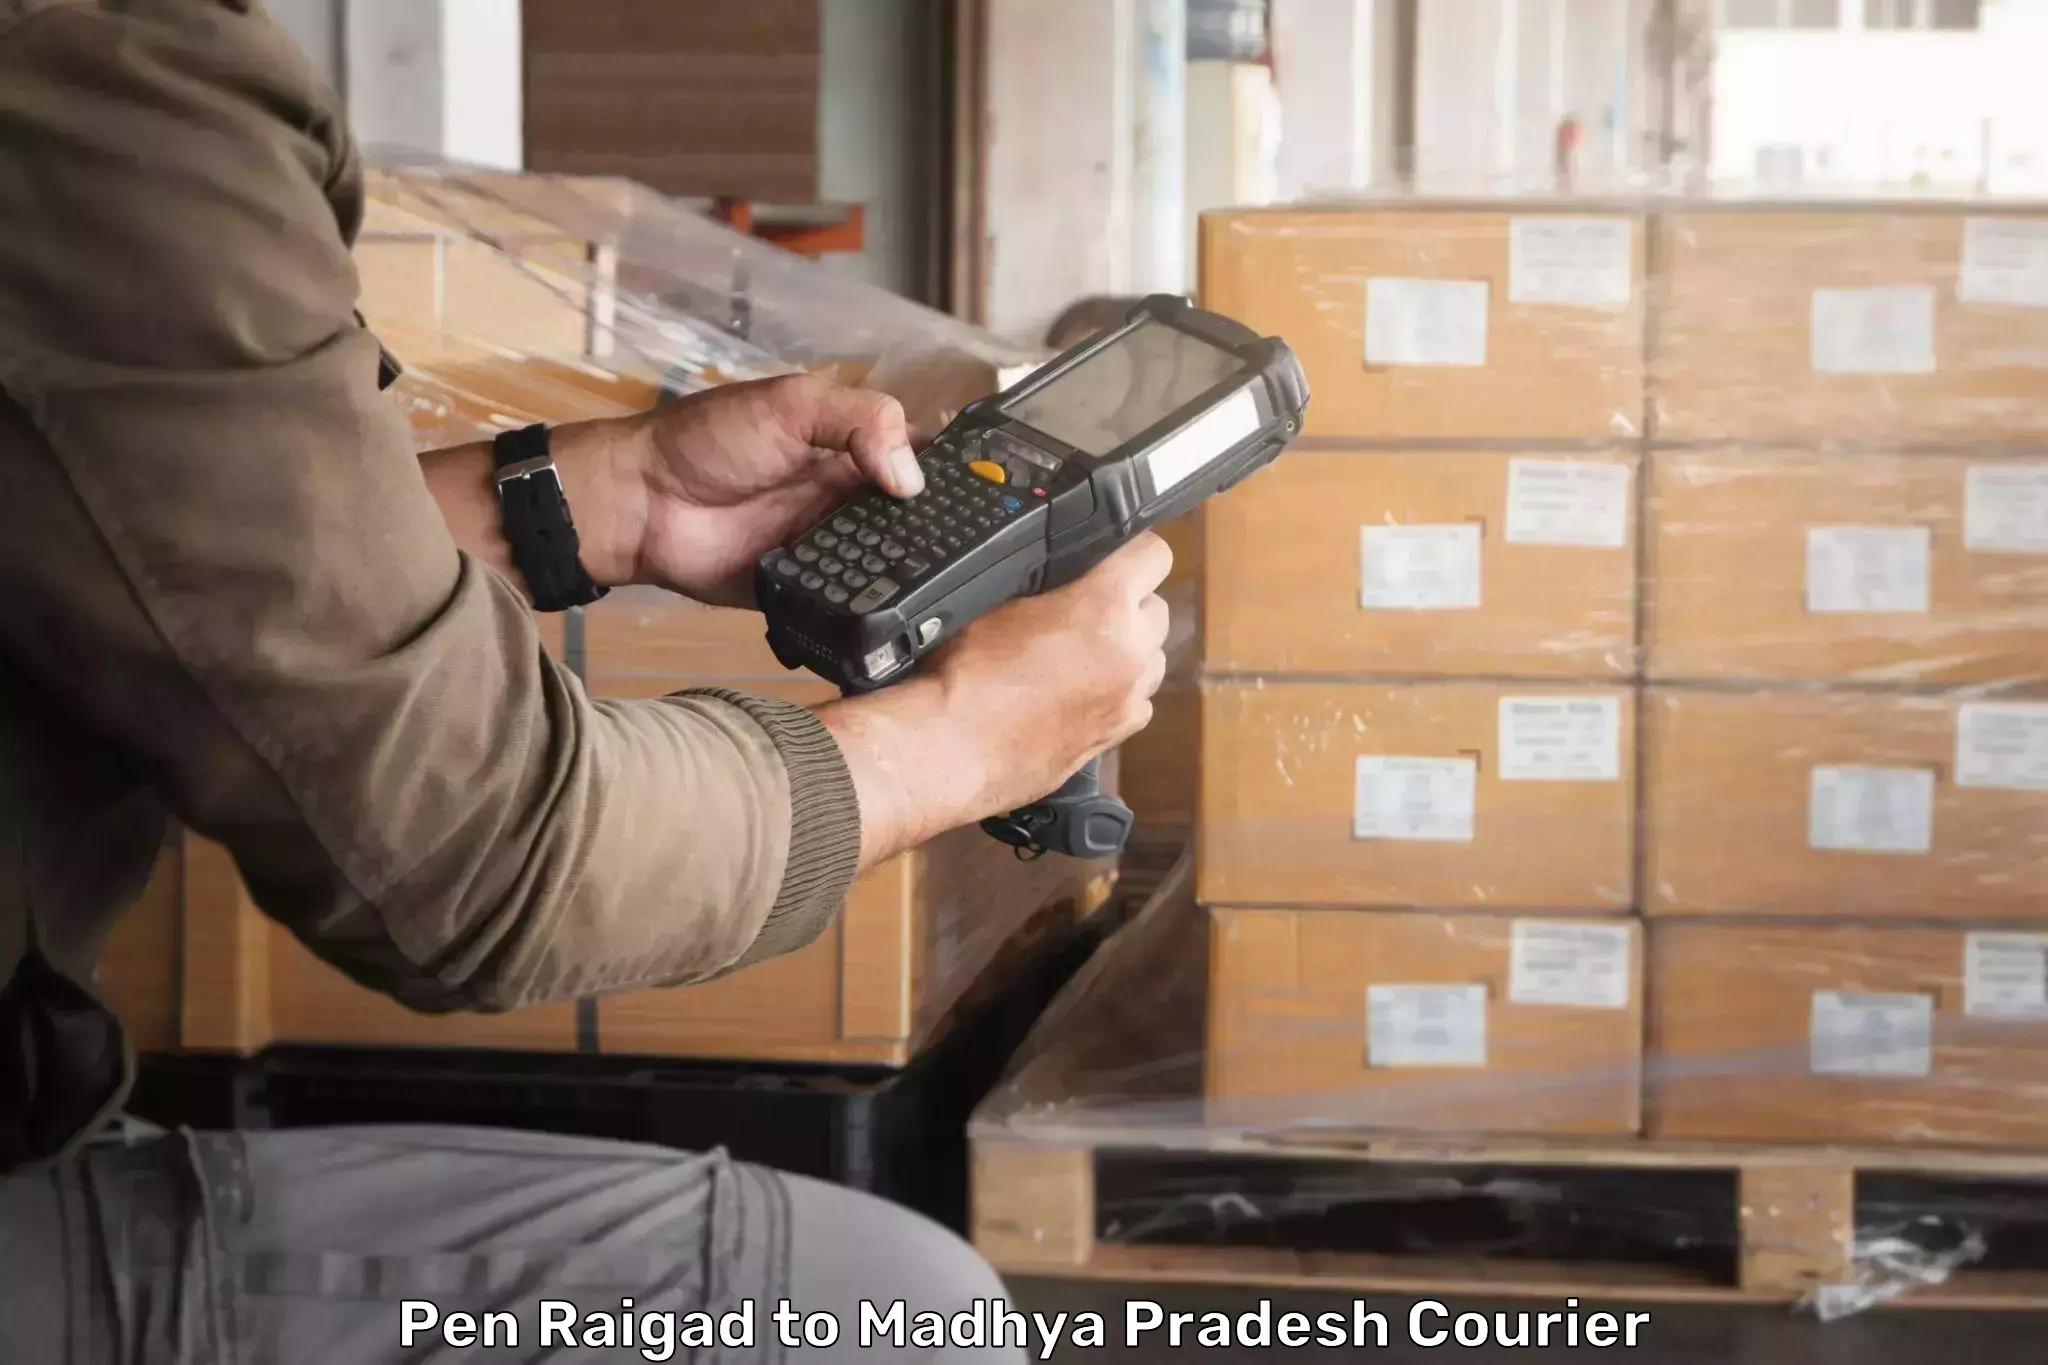 Pharmaceutical courier Pen Raigad to Madhya Pradesh